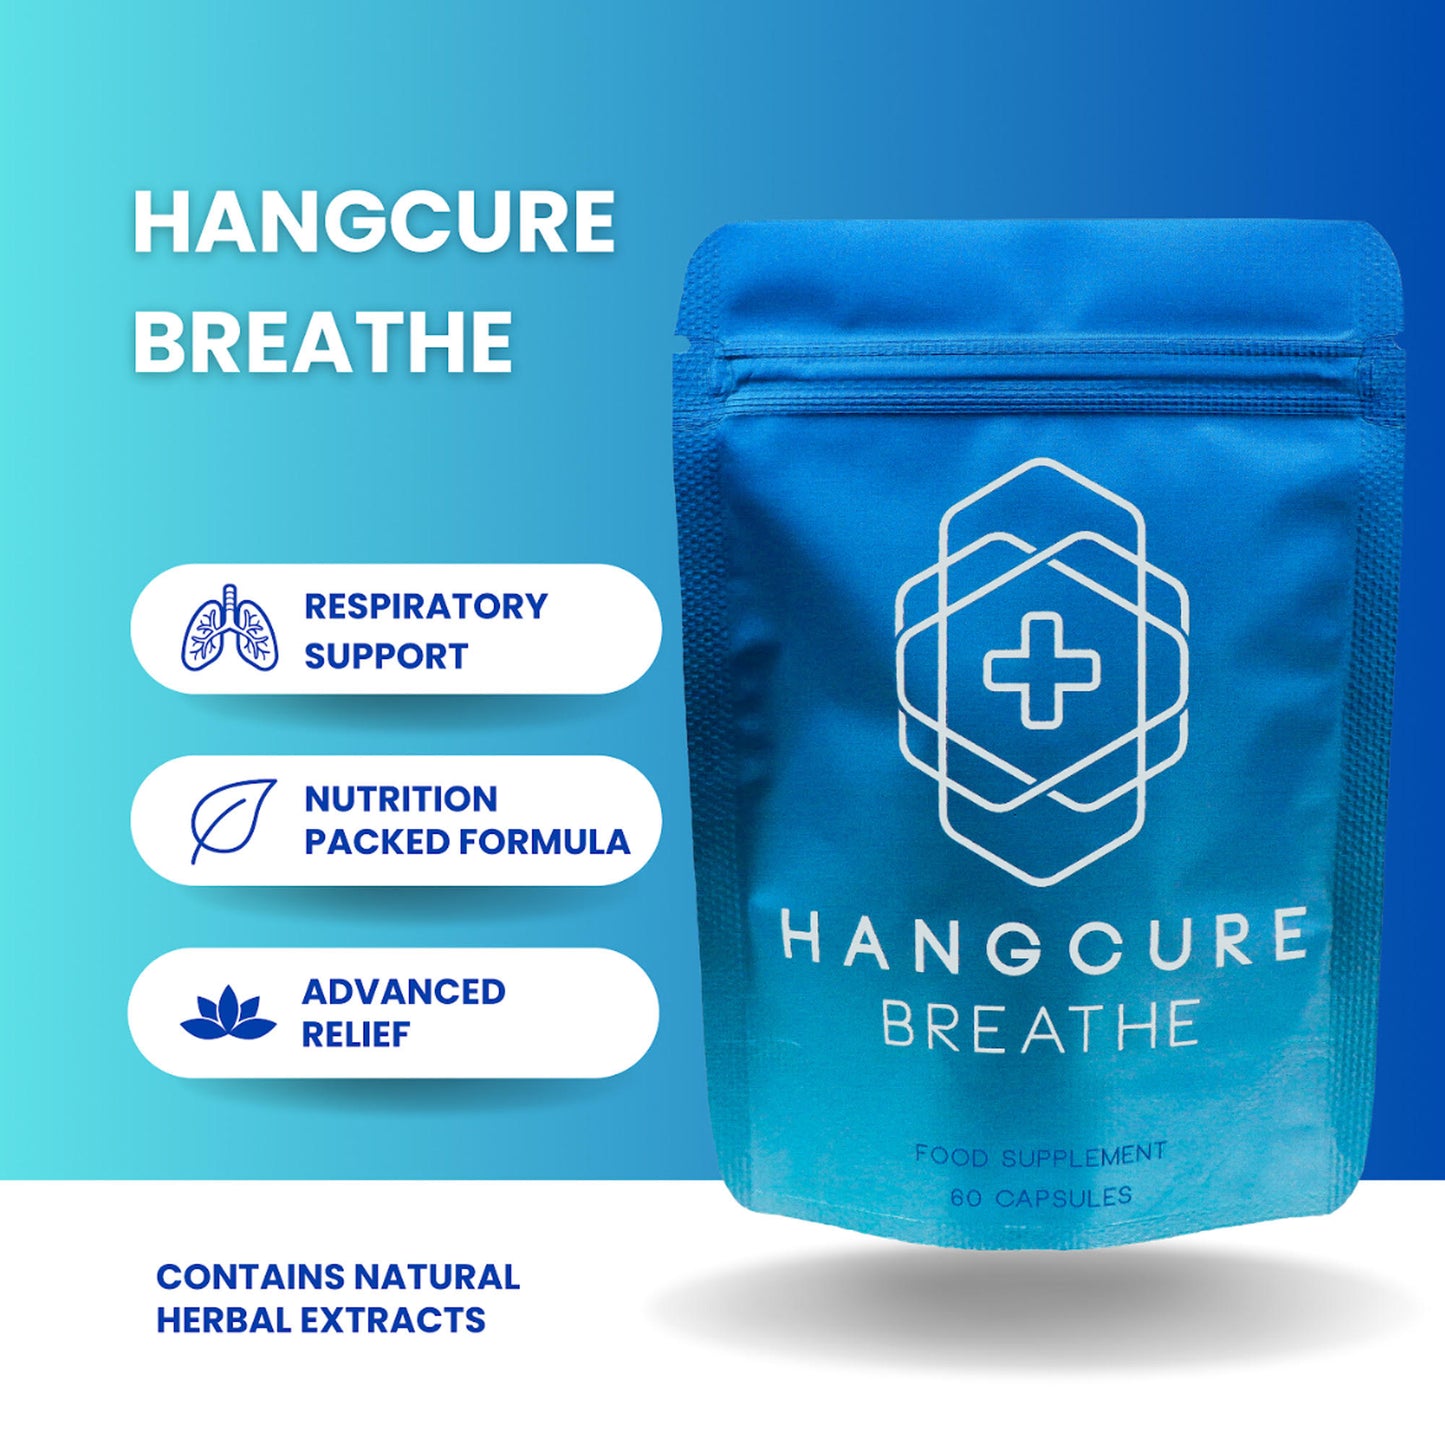 HANGCURE BREATHE